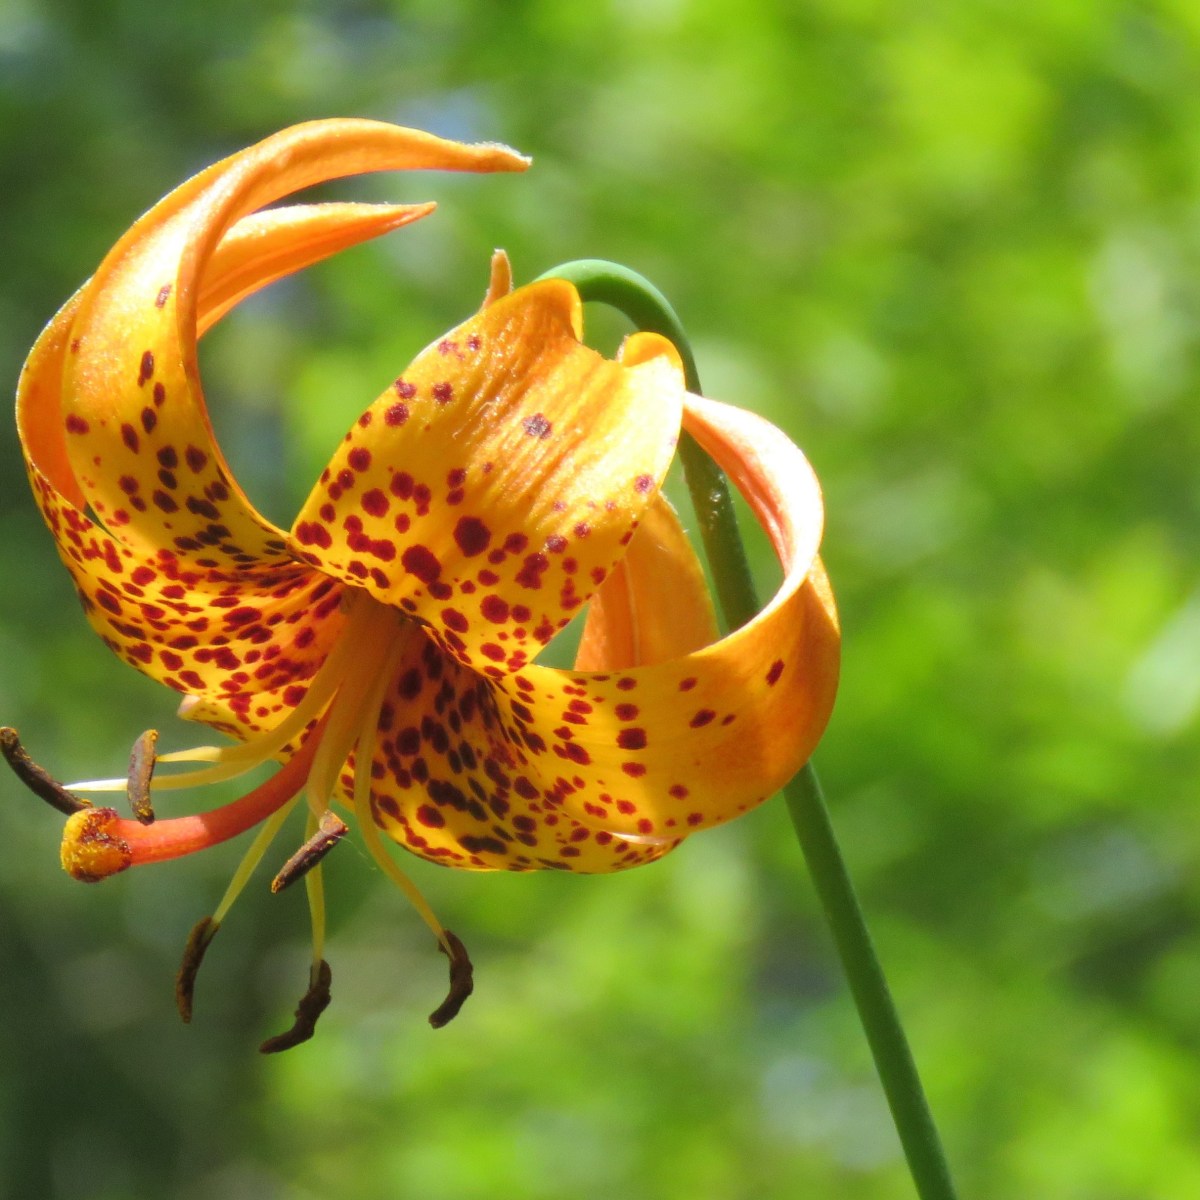 A Michigan Lily